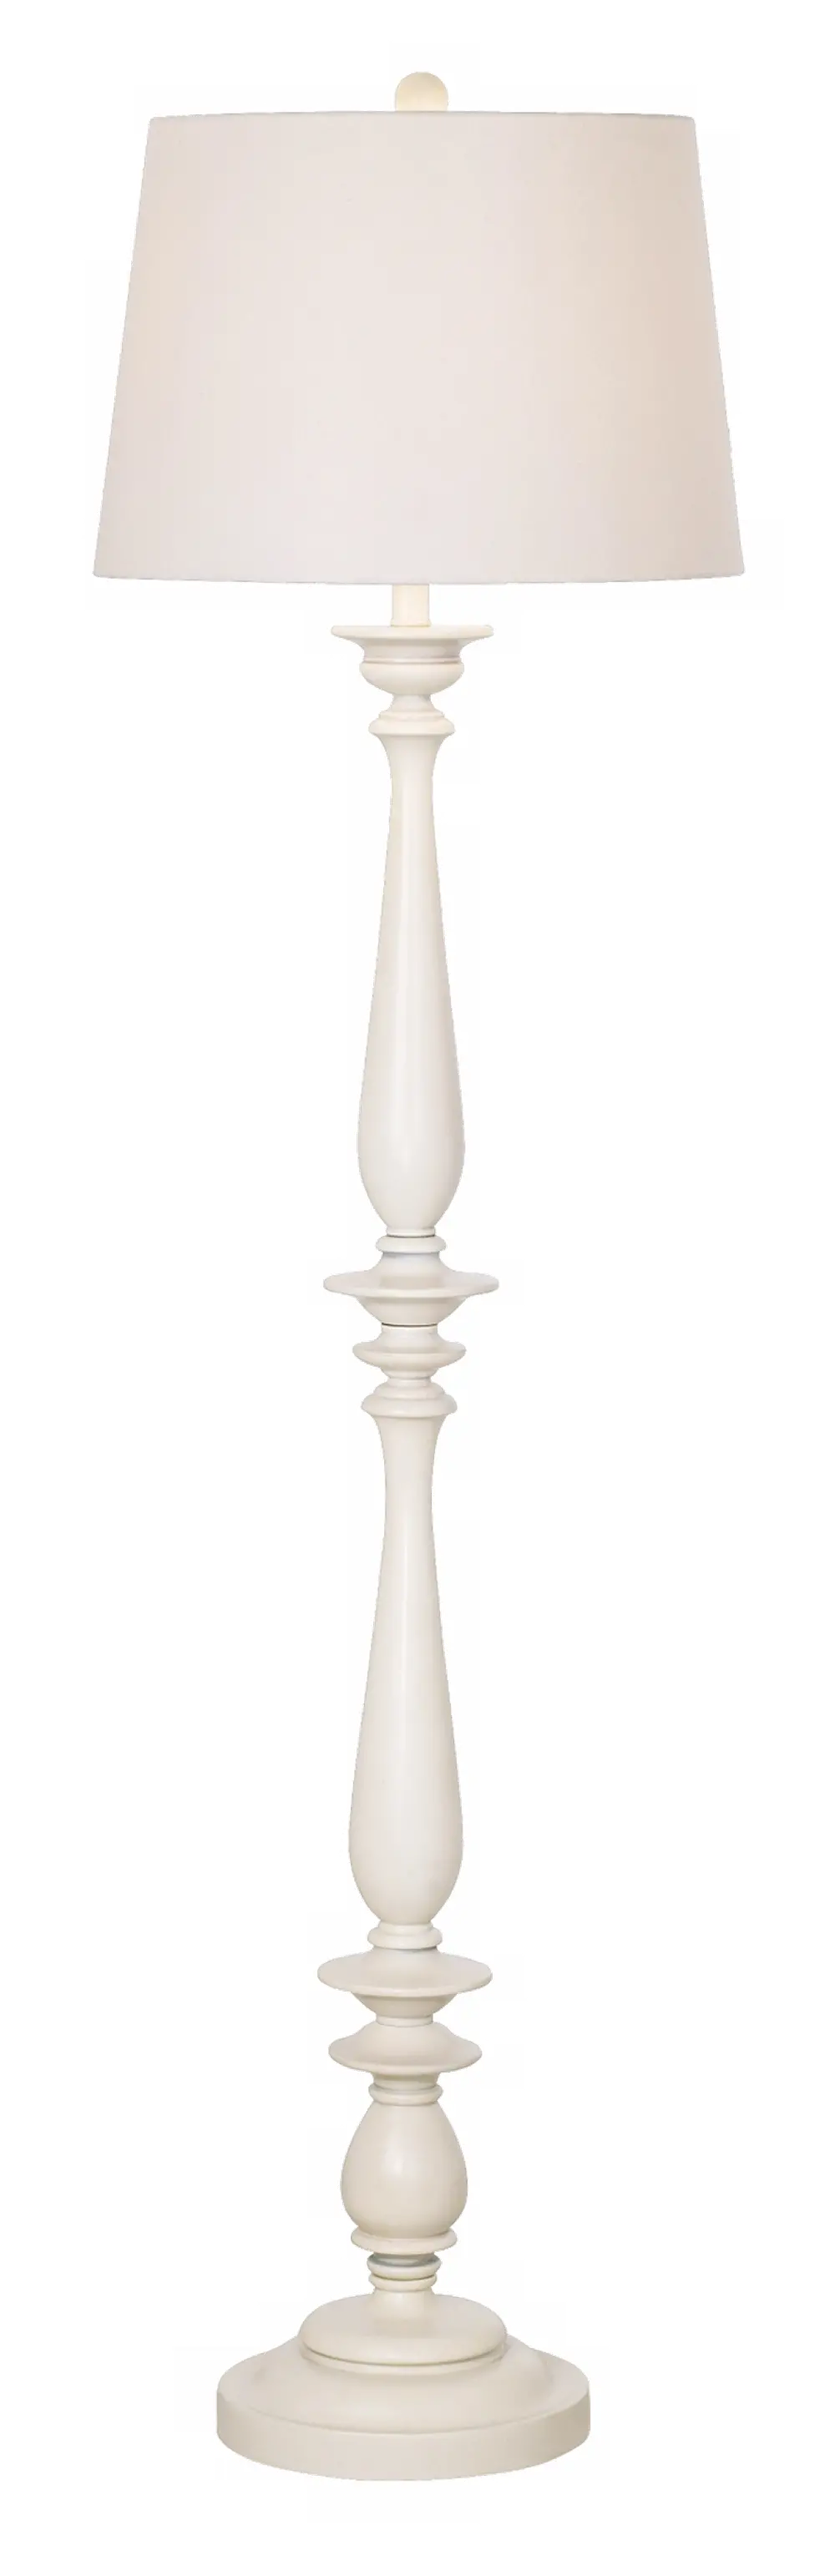 Wooden Off-White Turned Post Floor Lamp - Malibu-1